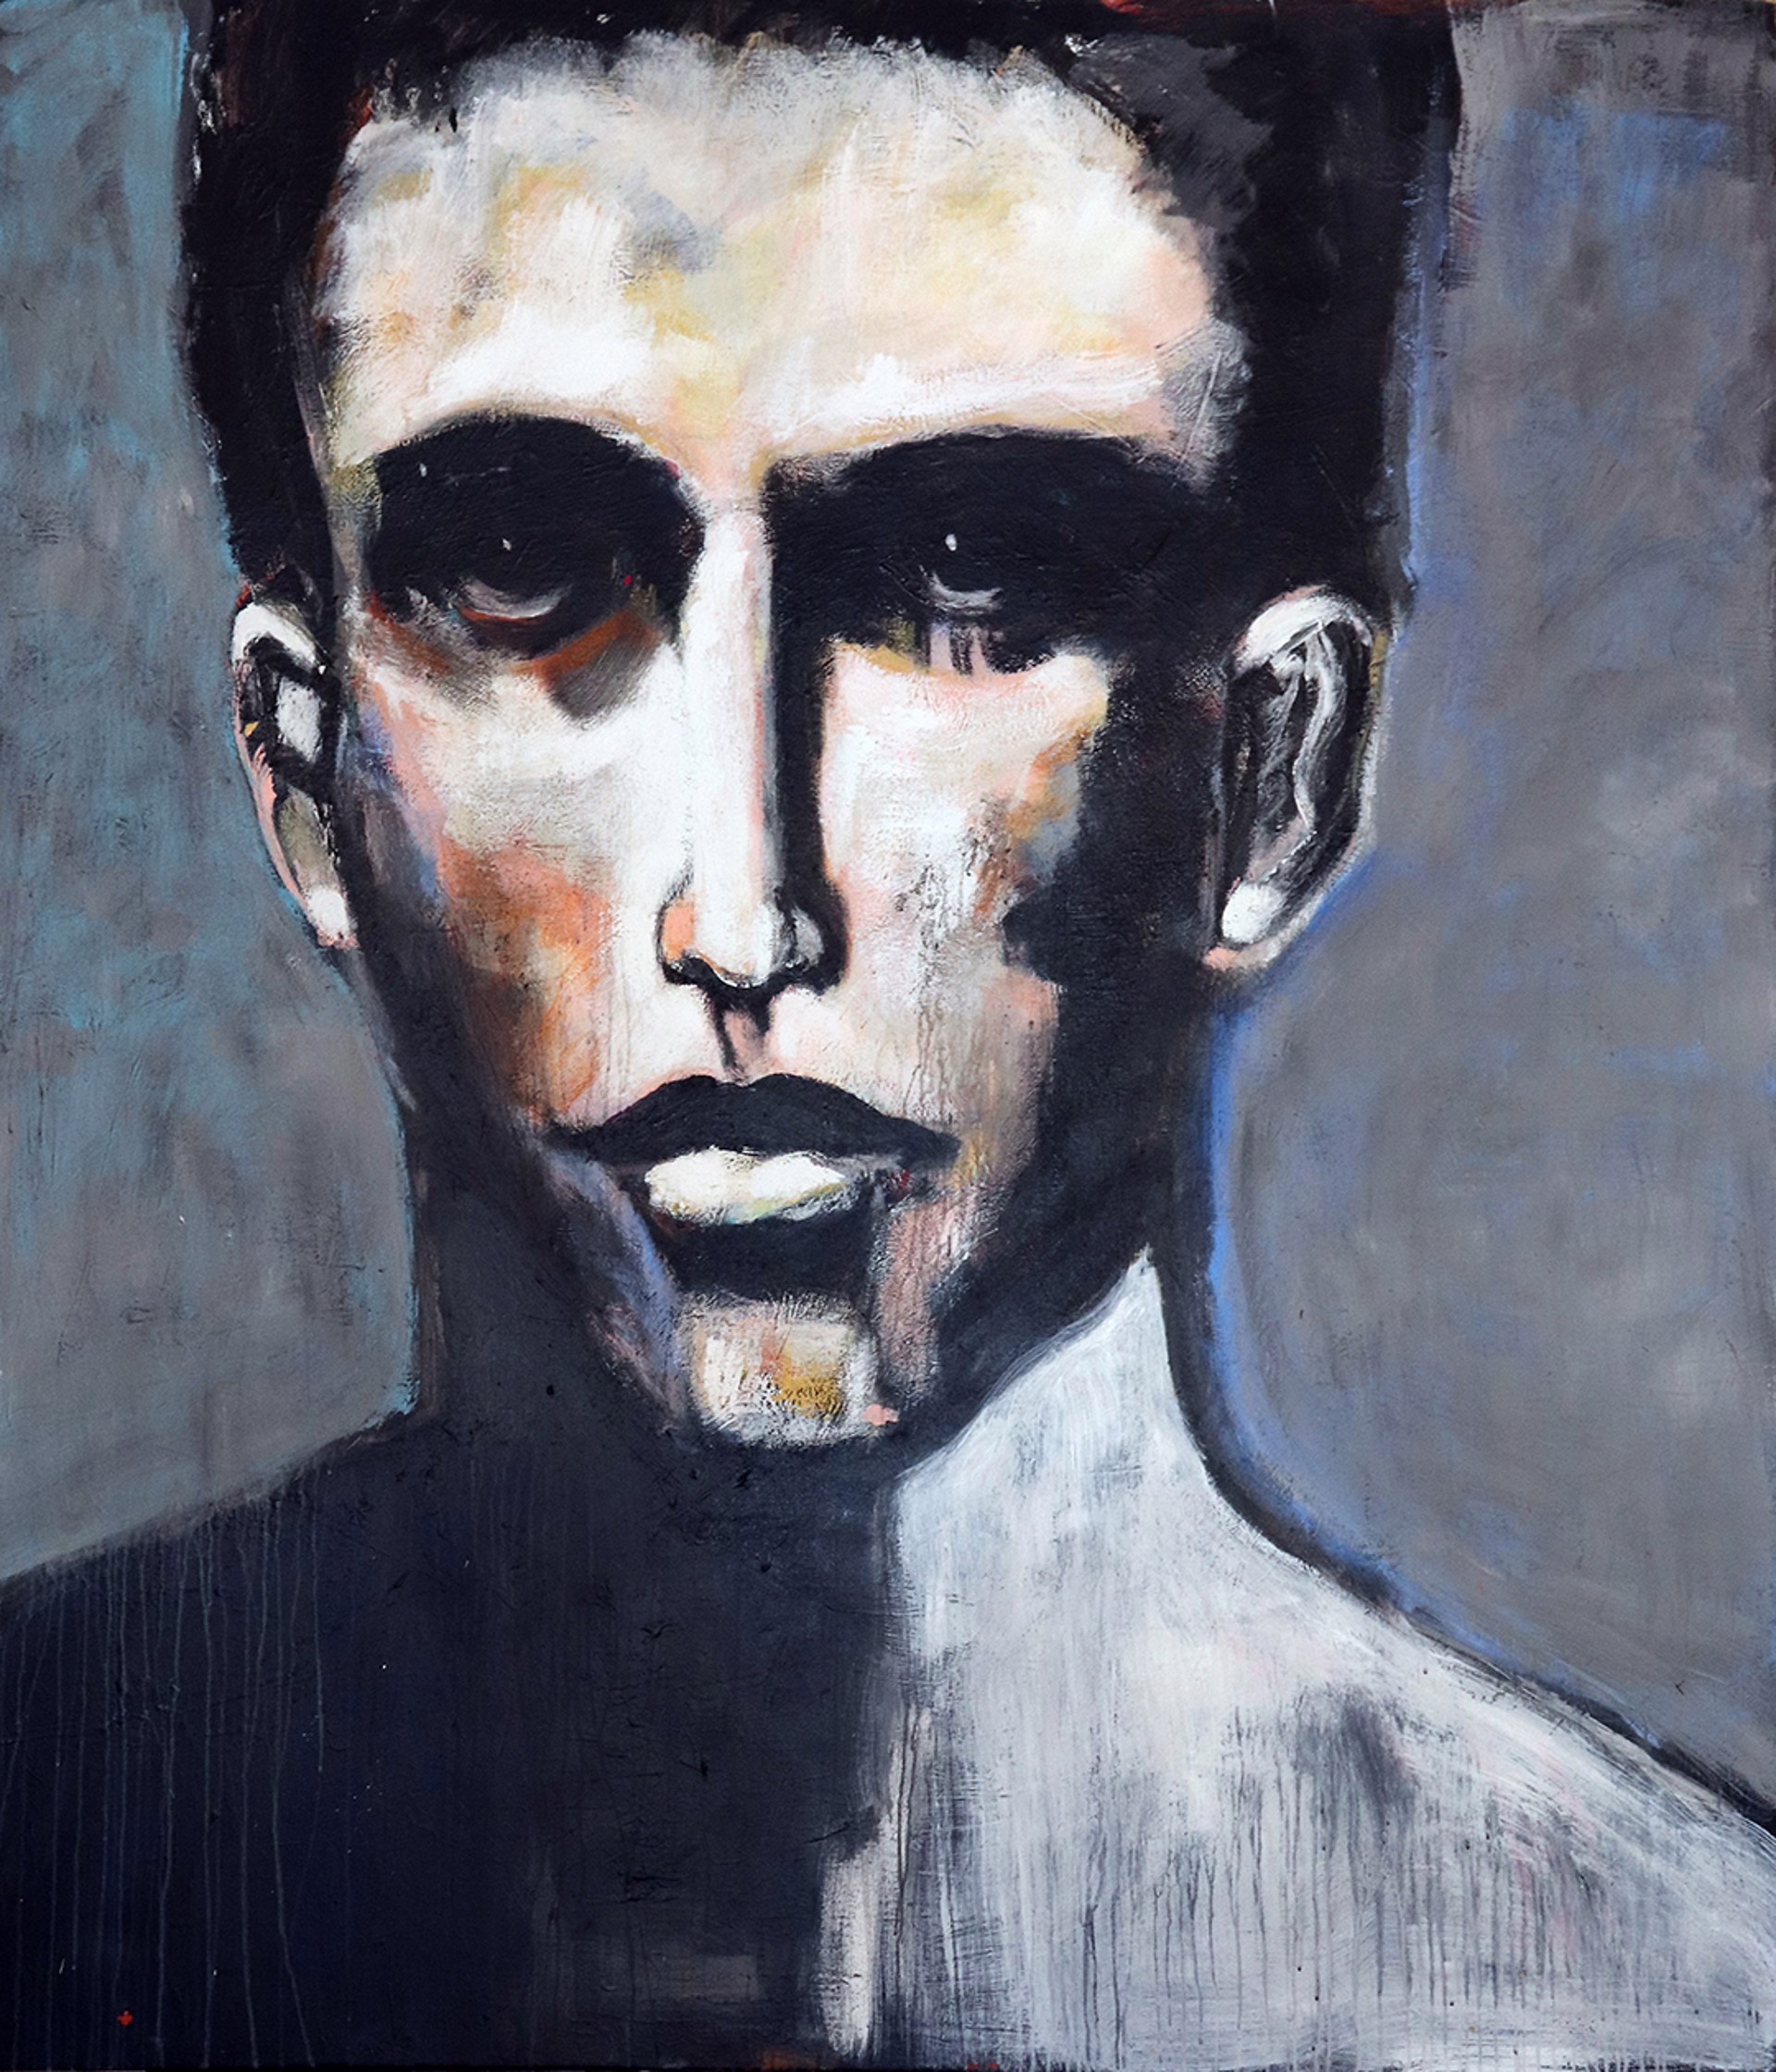 Man With White Face by James Koskinas